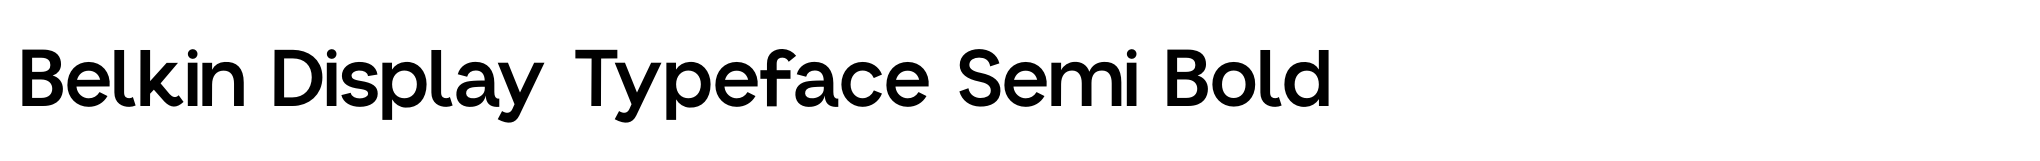 Belkin Display Typeface Semi Bold image